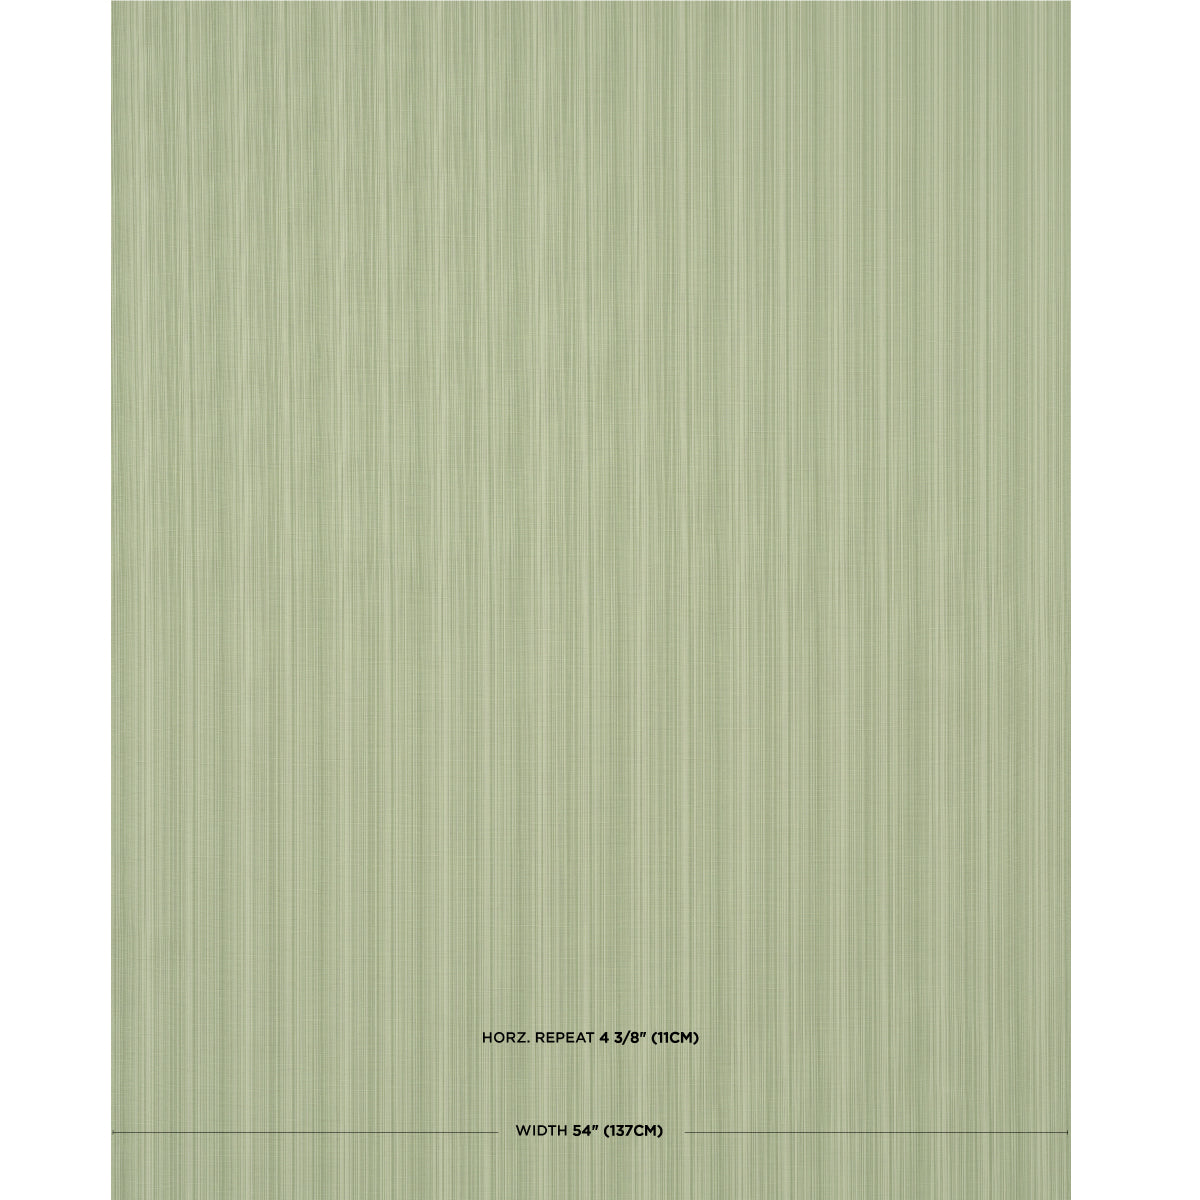 Purchase 83720 | Gracie Solid Strie, Leaf Green - Schumacher Fabric